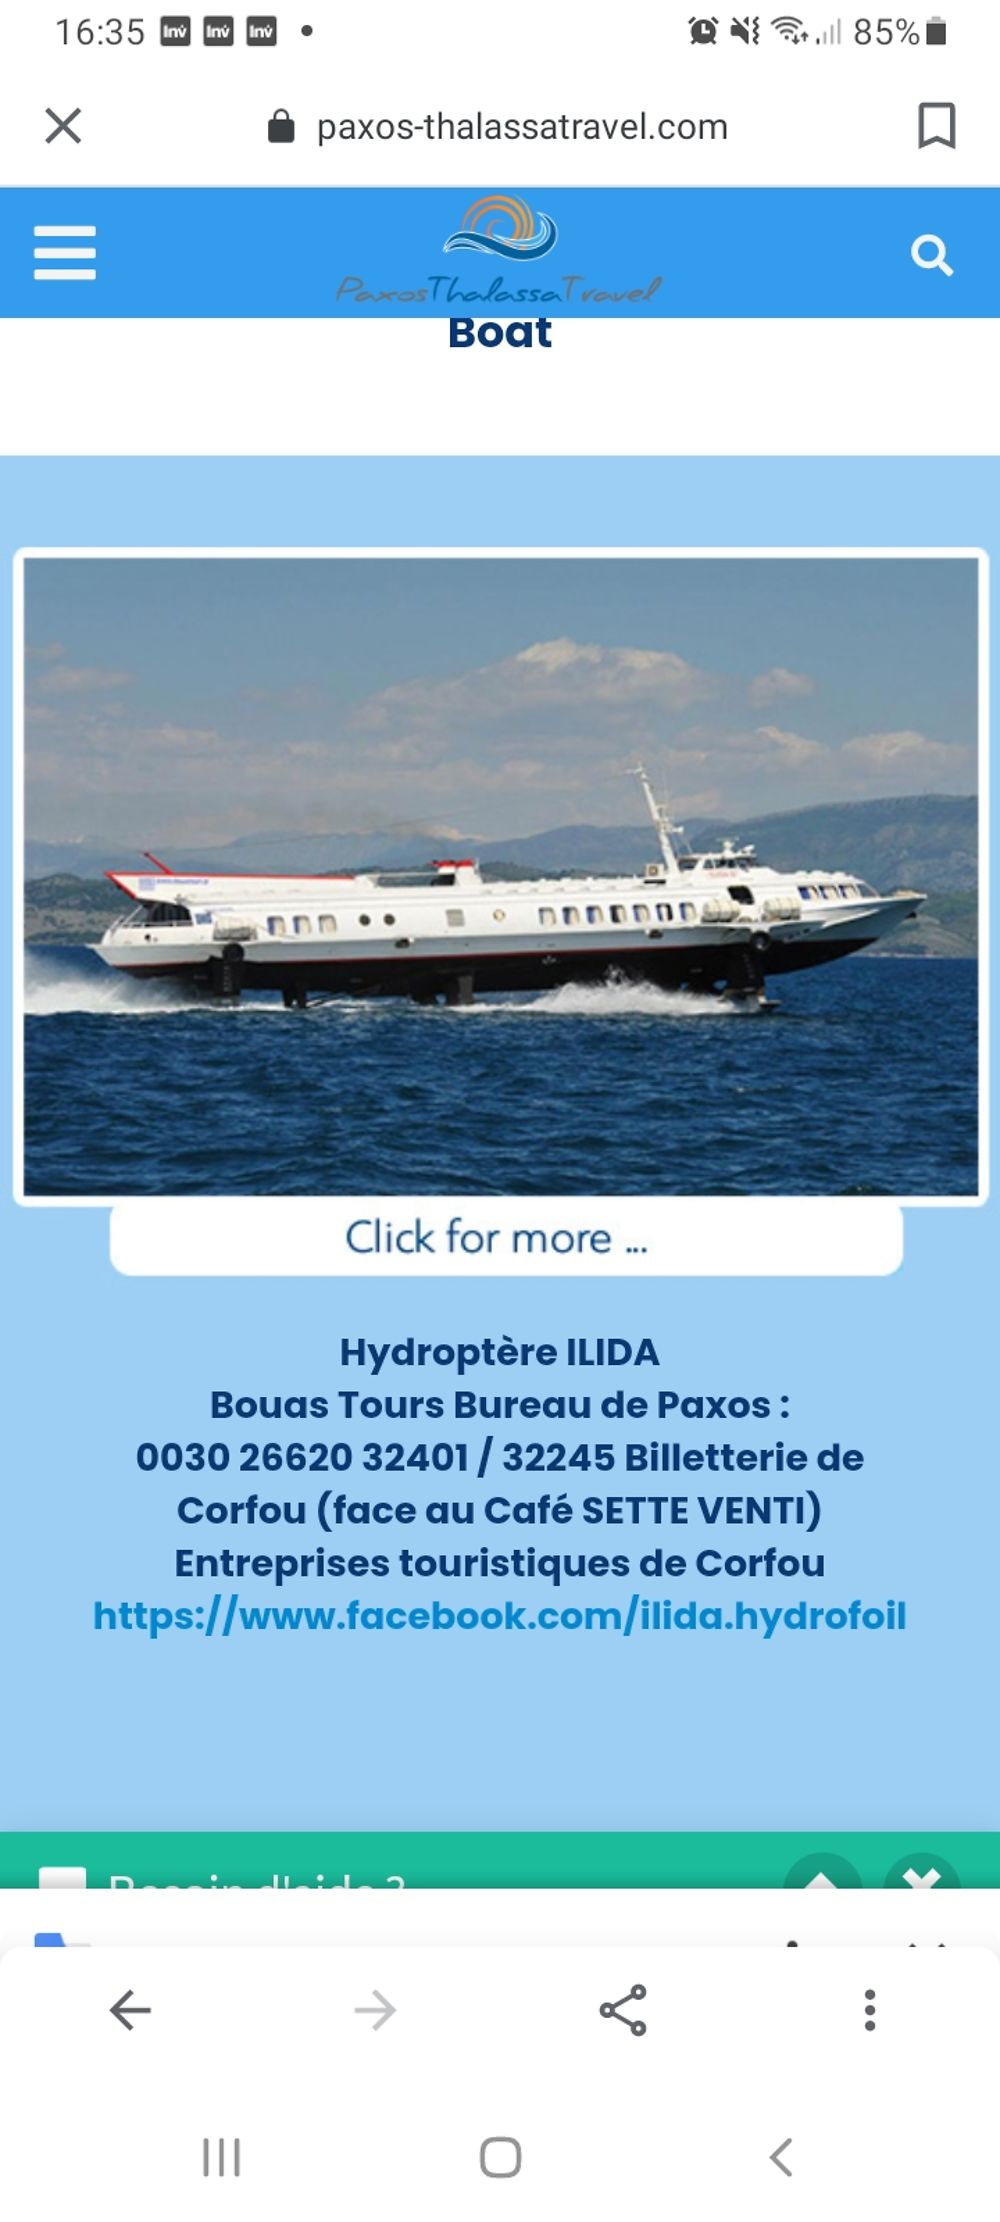 Re: Trajet bateau Kerkyra (port de Corfou) vers Gaios (île de Paxos) - frederic-Malignier